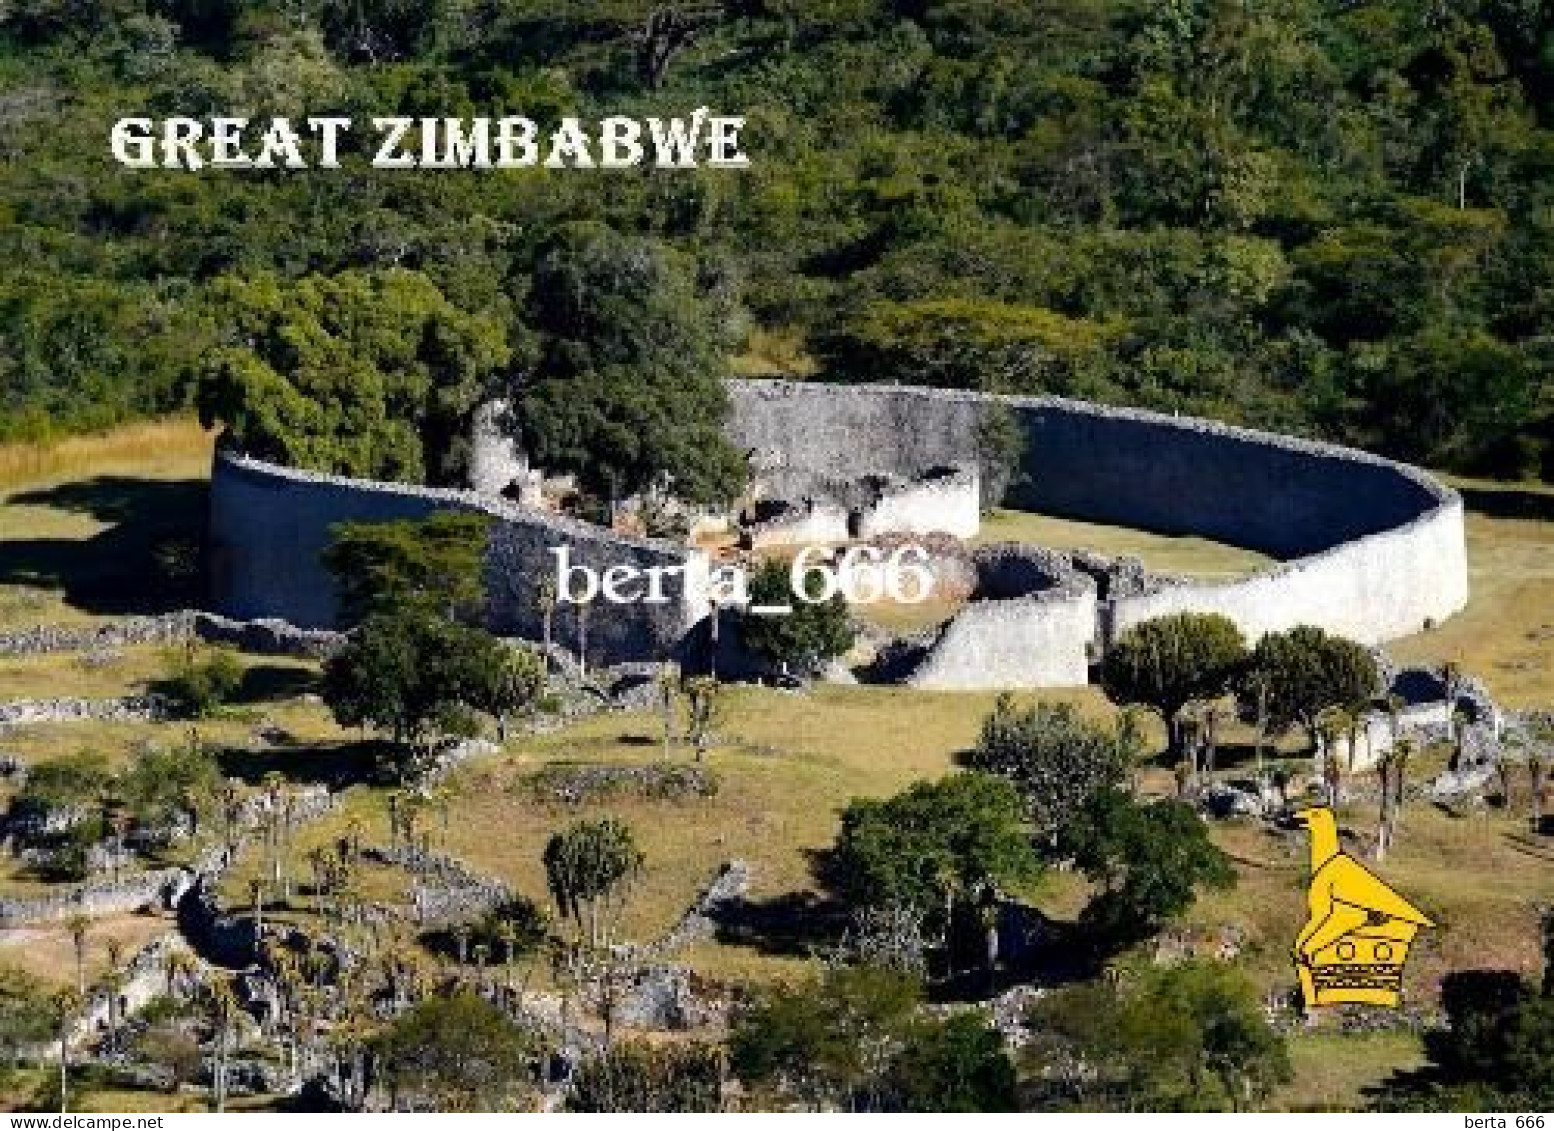 Zimbabwe Great Zimbabwe UNESCO New Postcard - Simbabwe